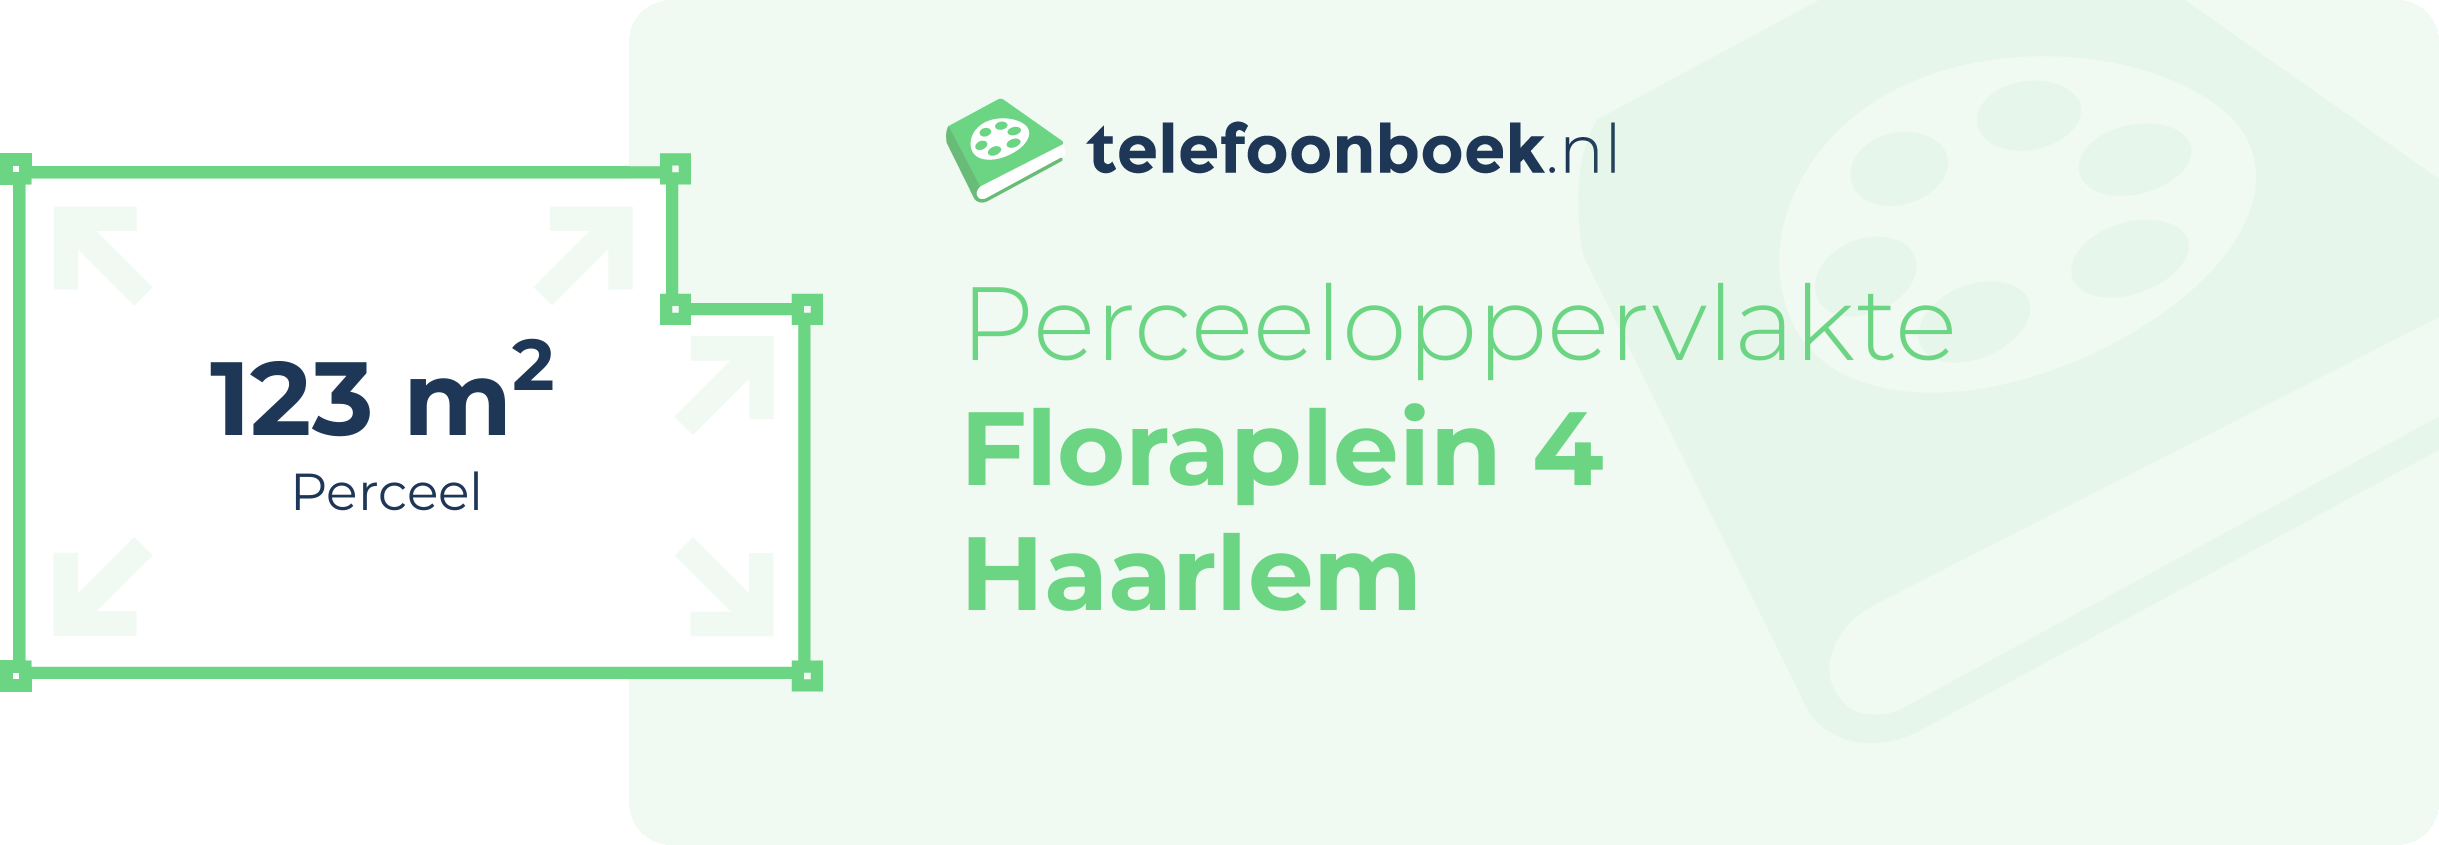 Perceeloppervlakte Floraplein 4 Haarlem